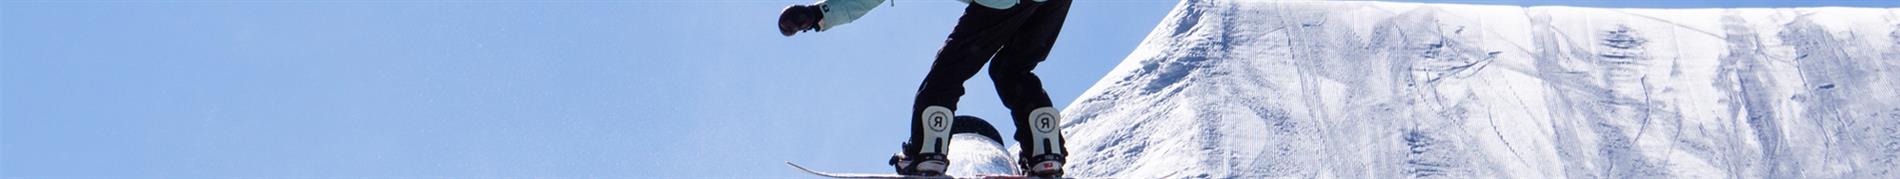 Burton Women's Snowboard Pants: Warm, Waterproof and Awesome 